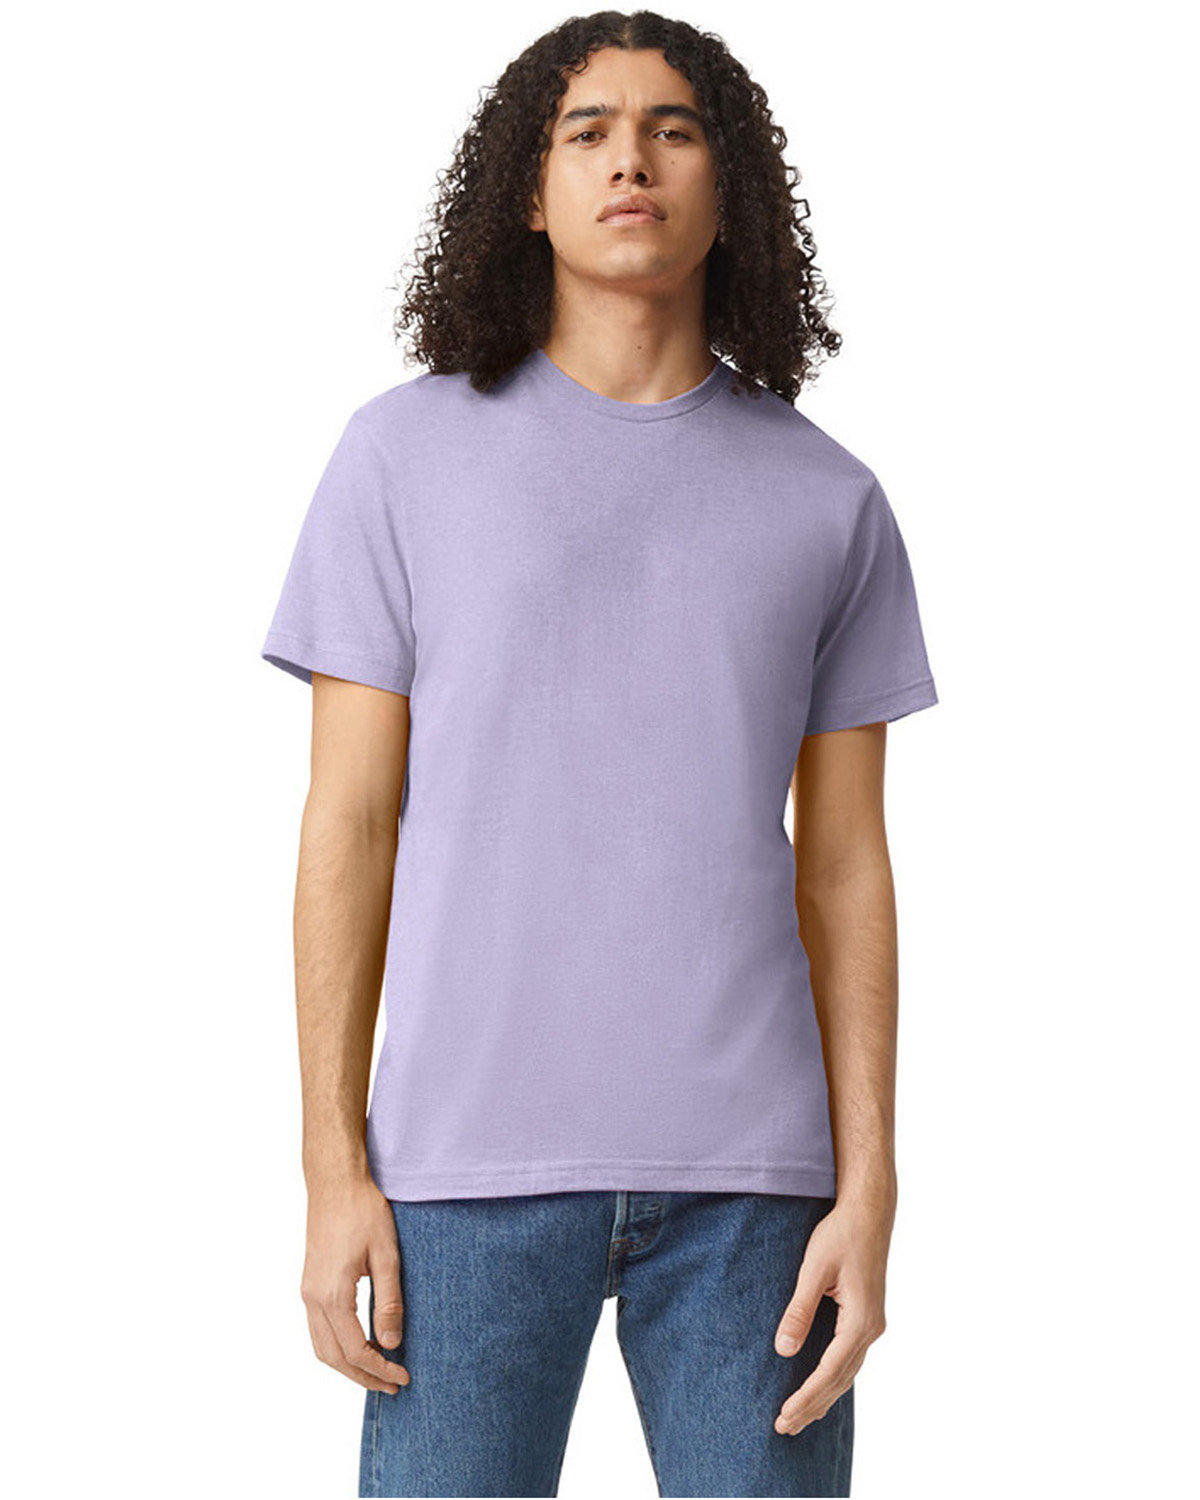 American Apparel Unisex CVC T-Shirt HEATHER LILAC 